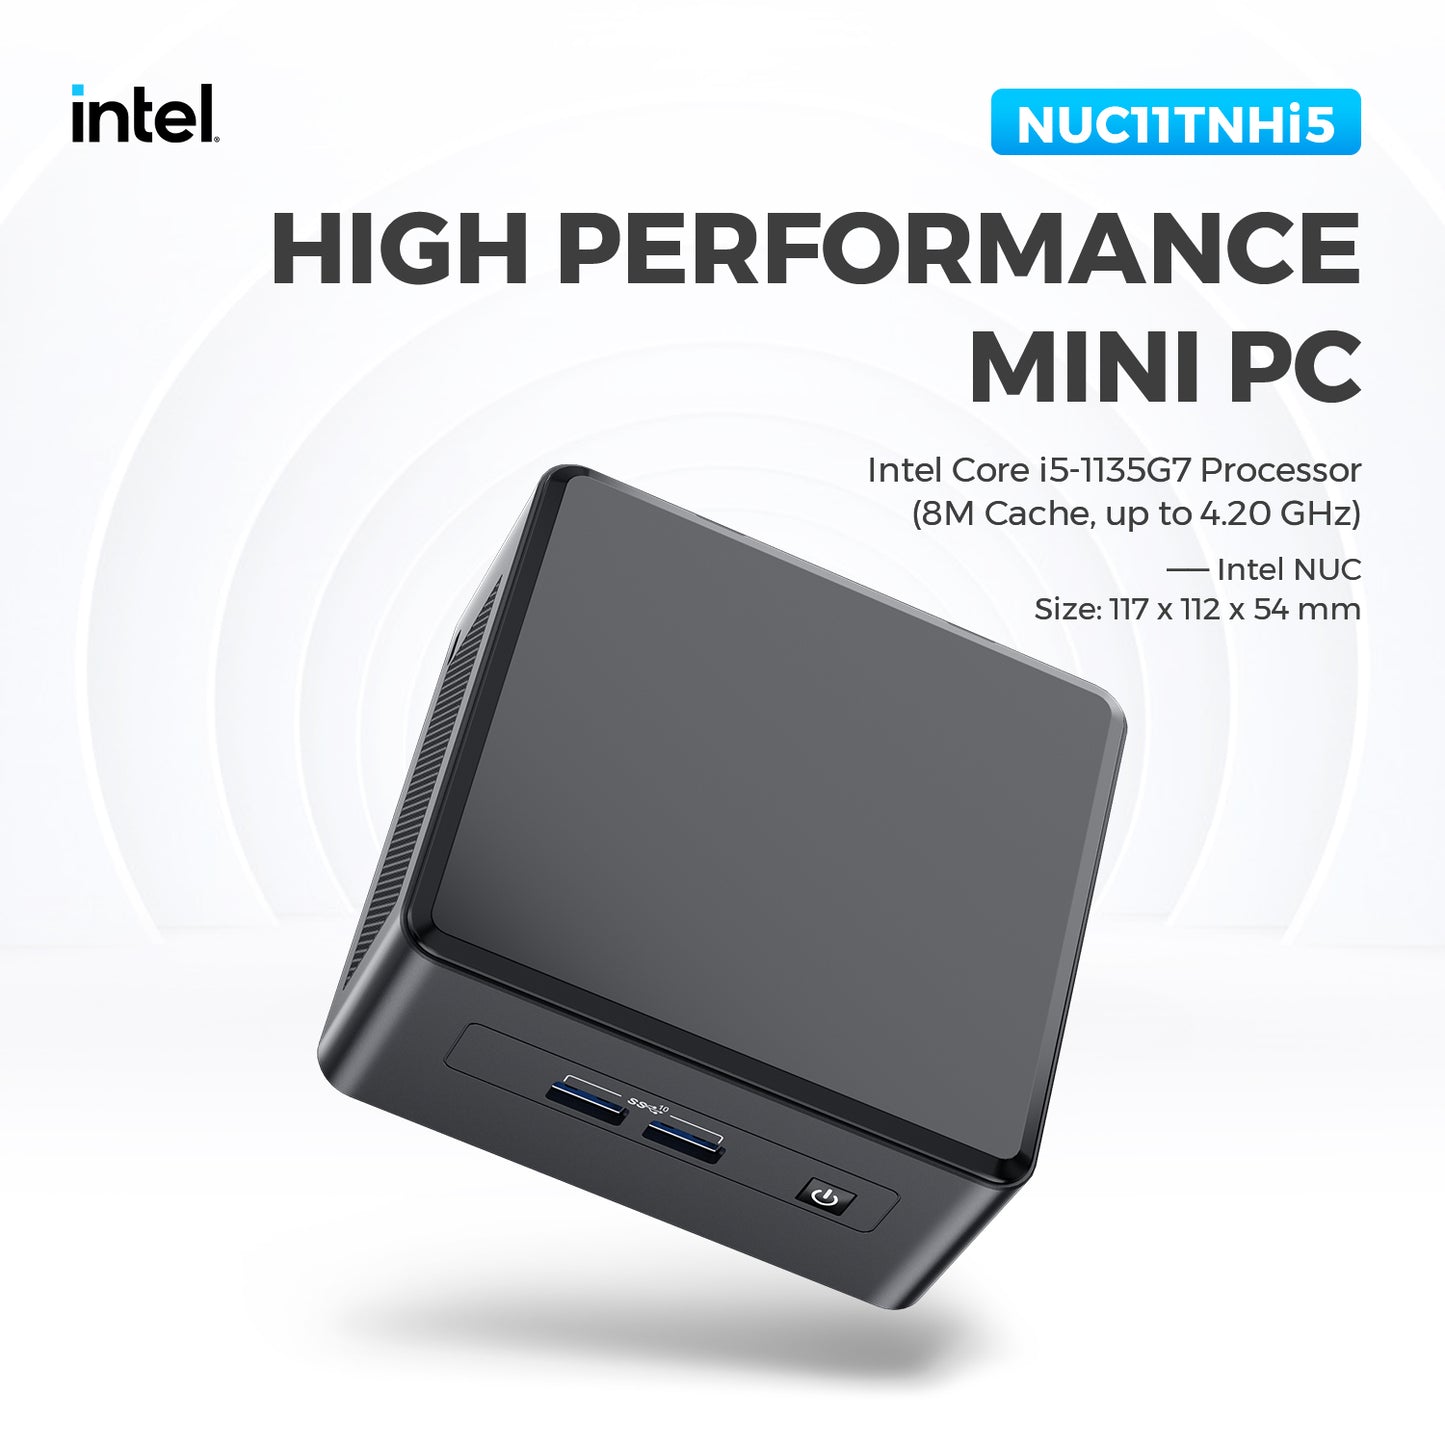 Intel NUC Core i5 1135G7 Mini PC